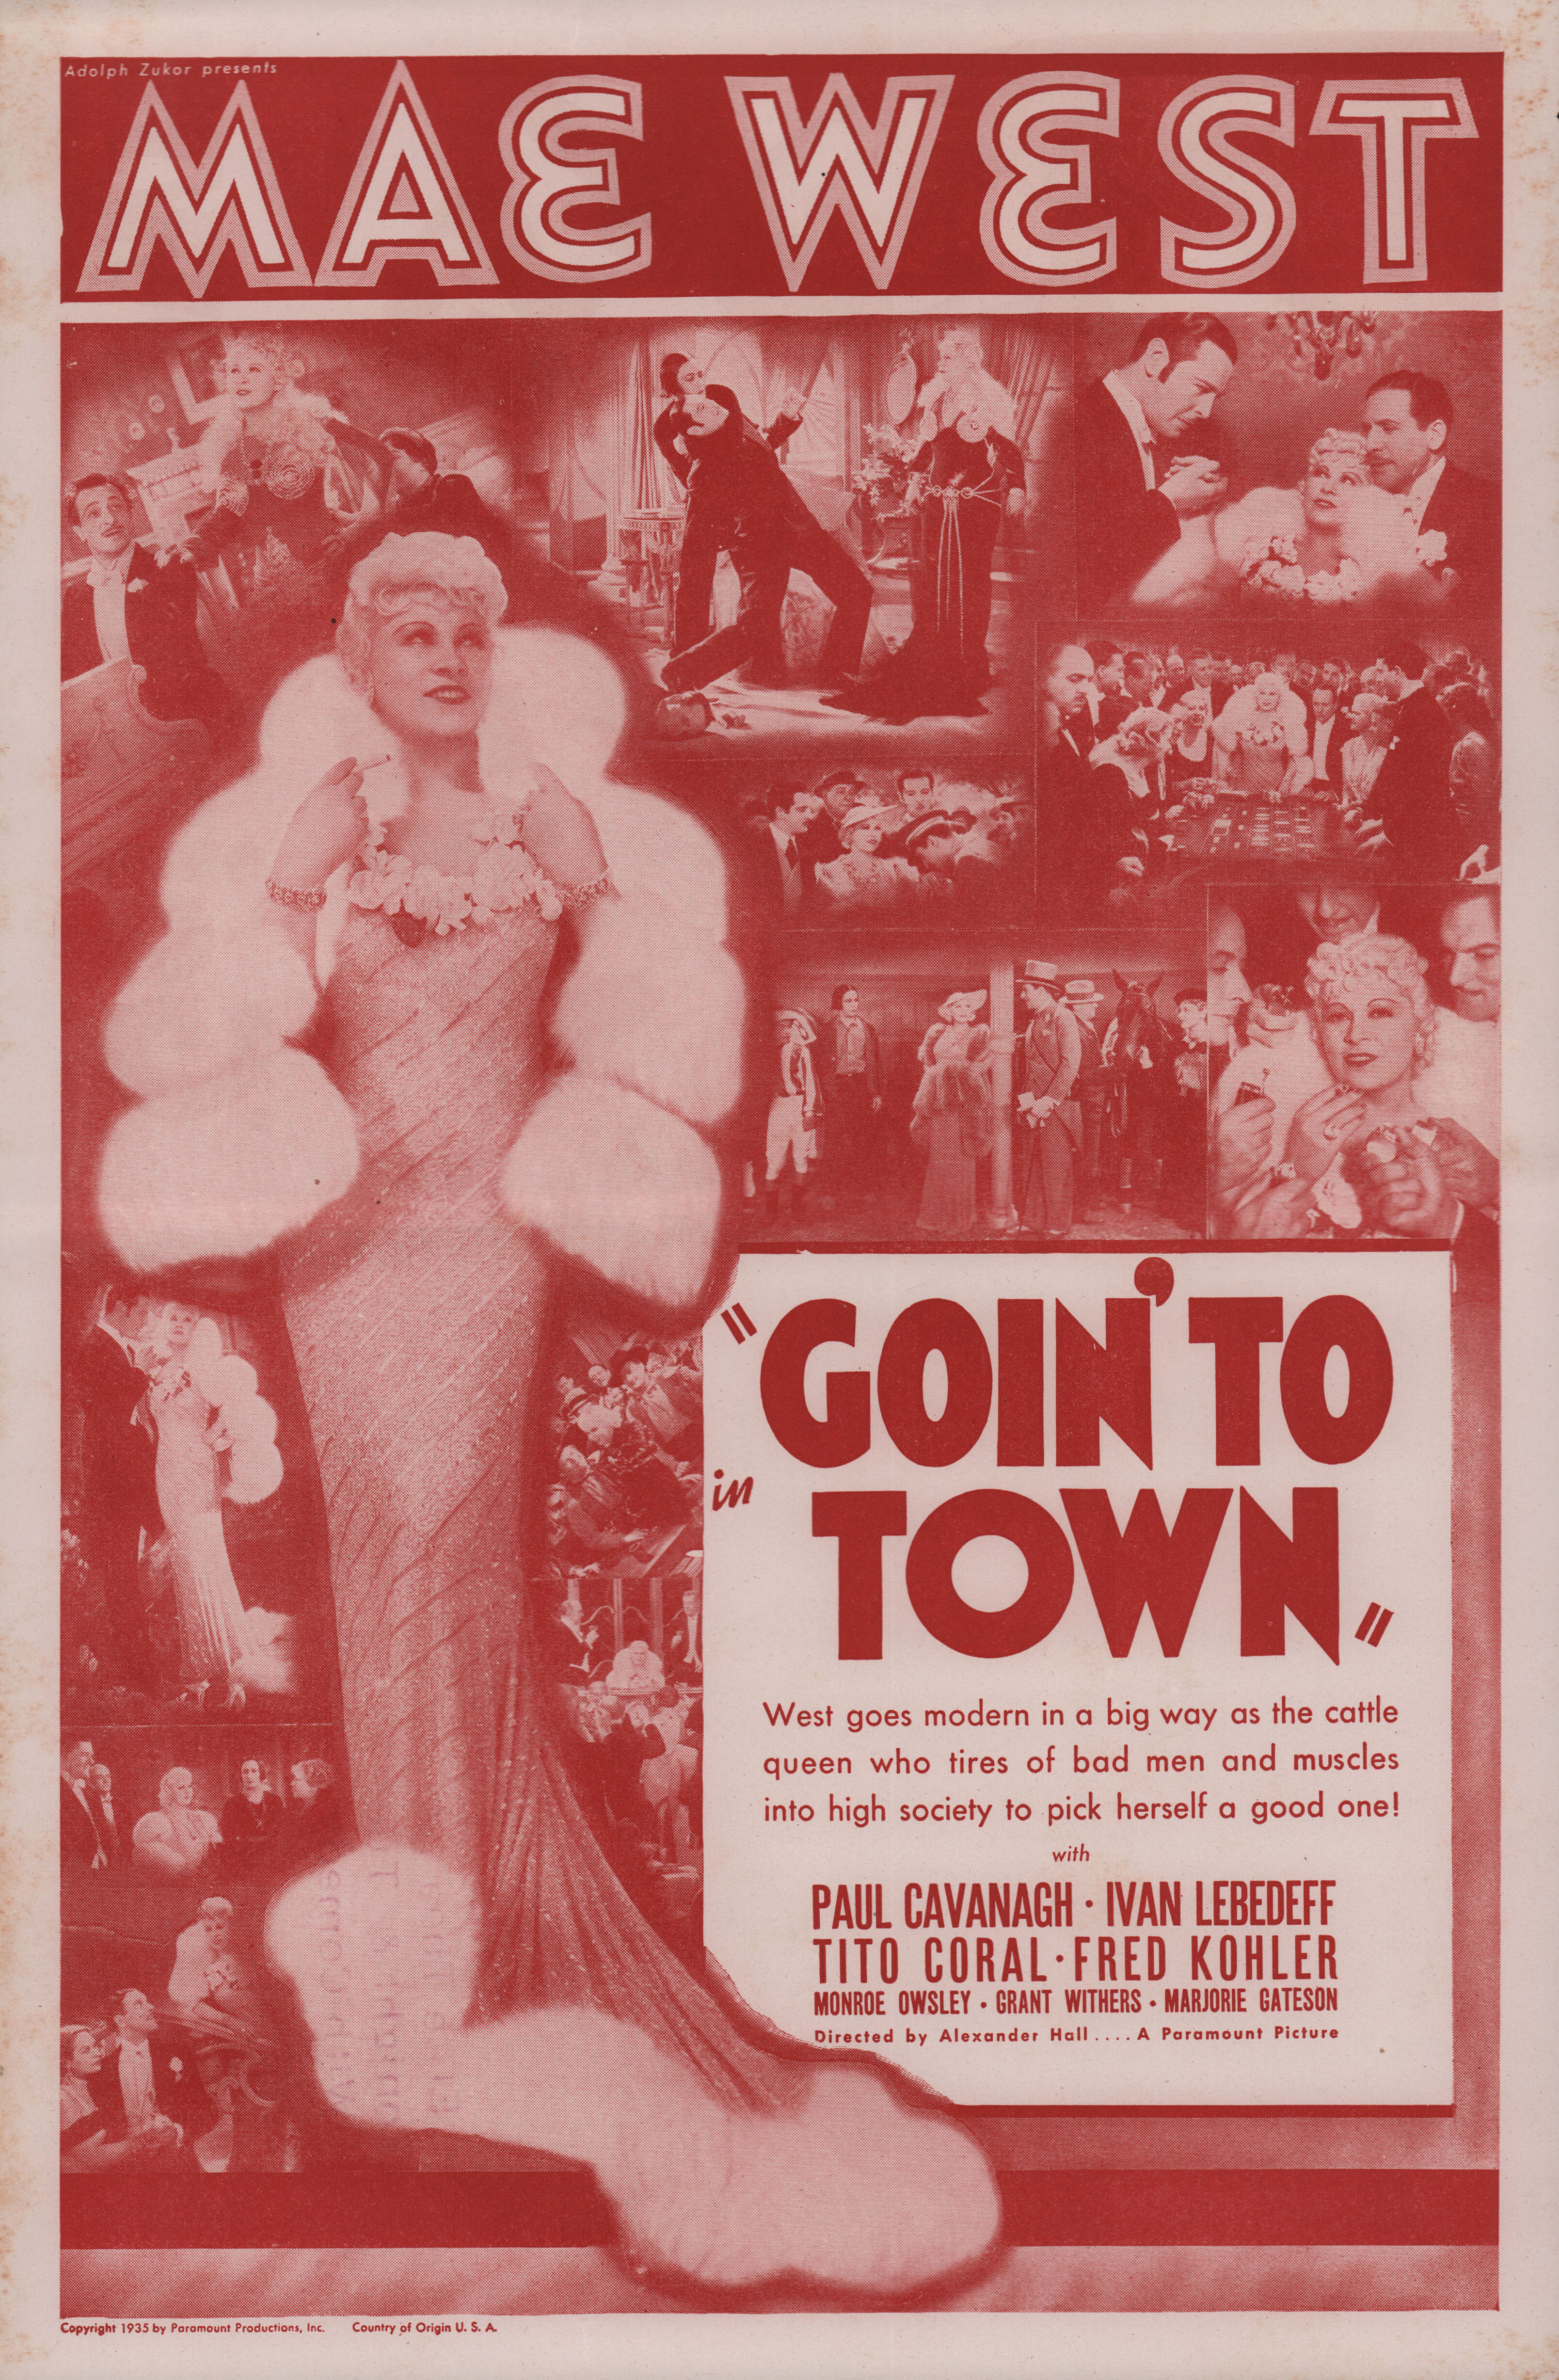 Иду в город (Goin to Town, 1935), режиссёр Александр Холл, постер к фильму в стиле ар-деко (США, 1935 год)